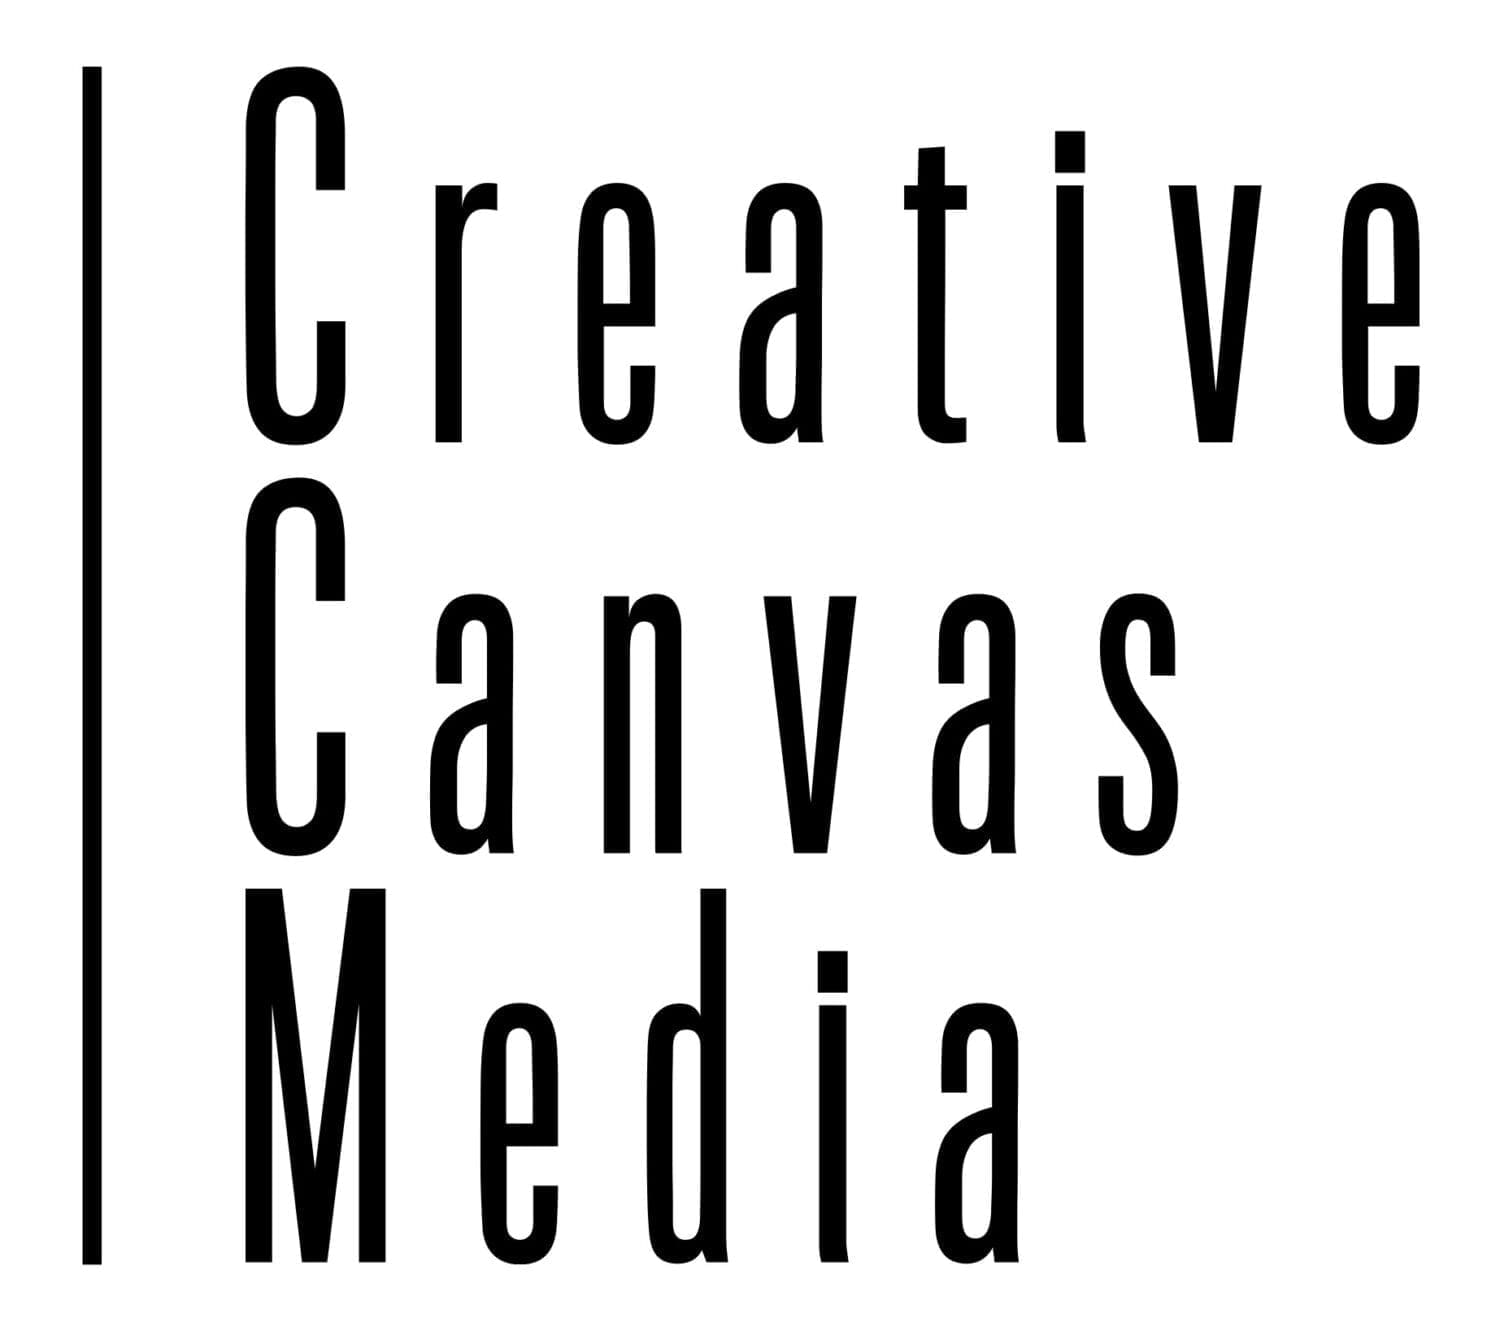 Creative Canvas Media Agency Logo